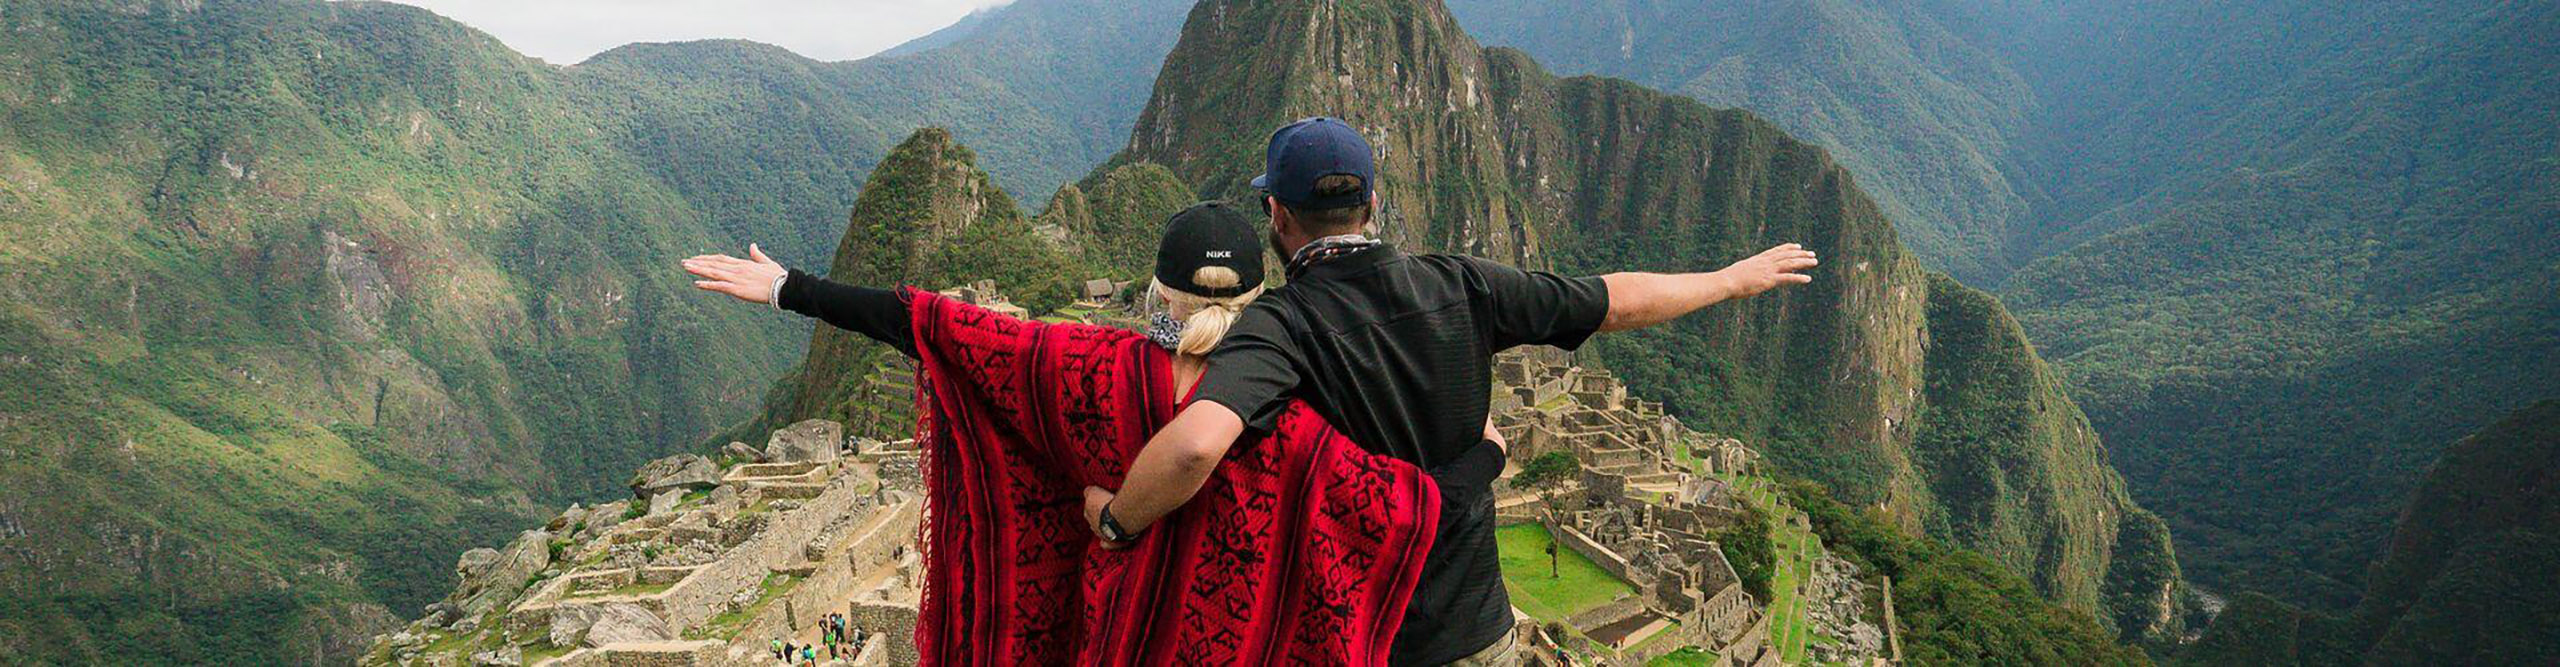 Couple looking at Machu Picchu Peru